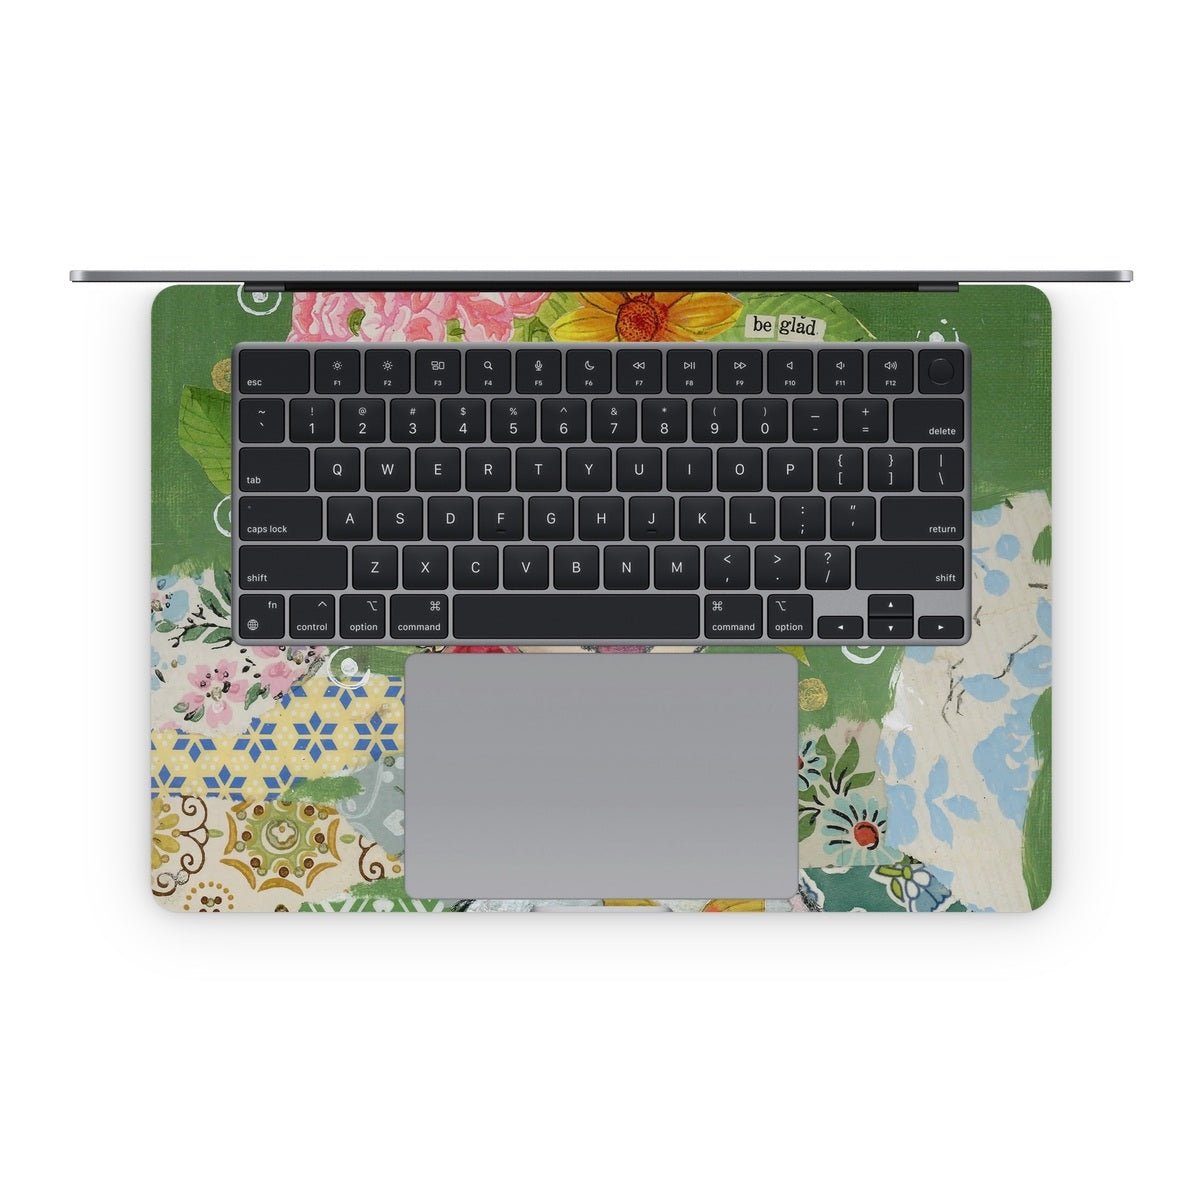 Be Glad - Apple MacBook Skin - Kelly Rae Roberts - DecalGirl